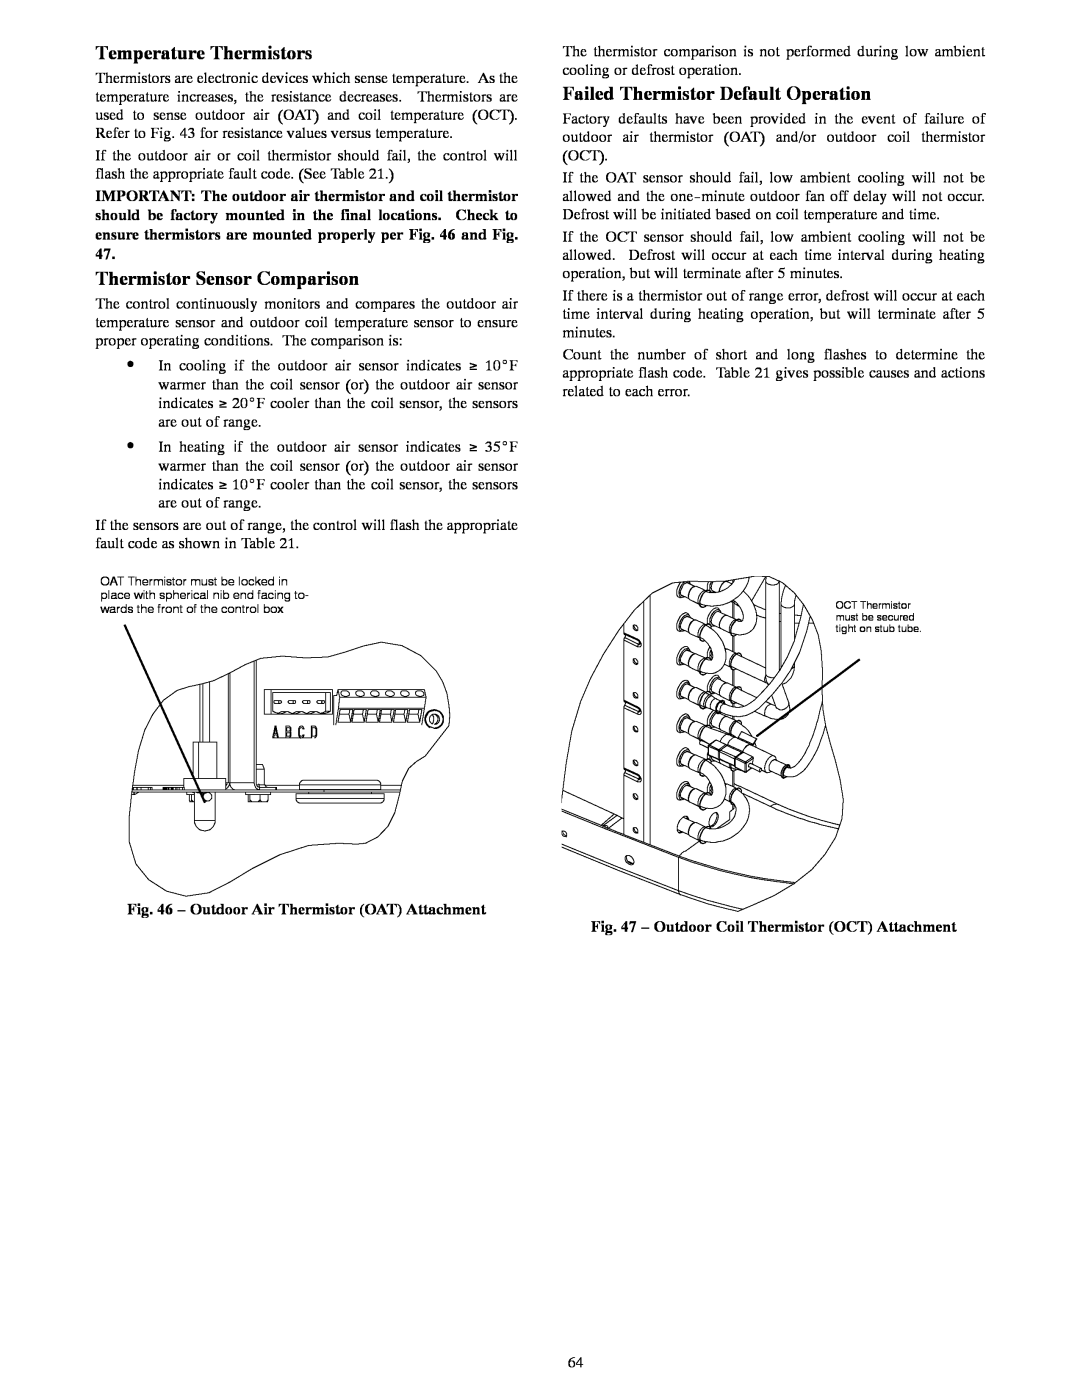 Bryant R-22 service manual Temperature Thermistors, Thermistor Sensor Comparison, Failed Thermistor Default Operation 